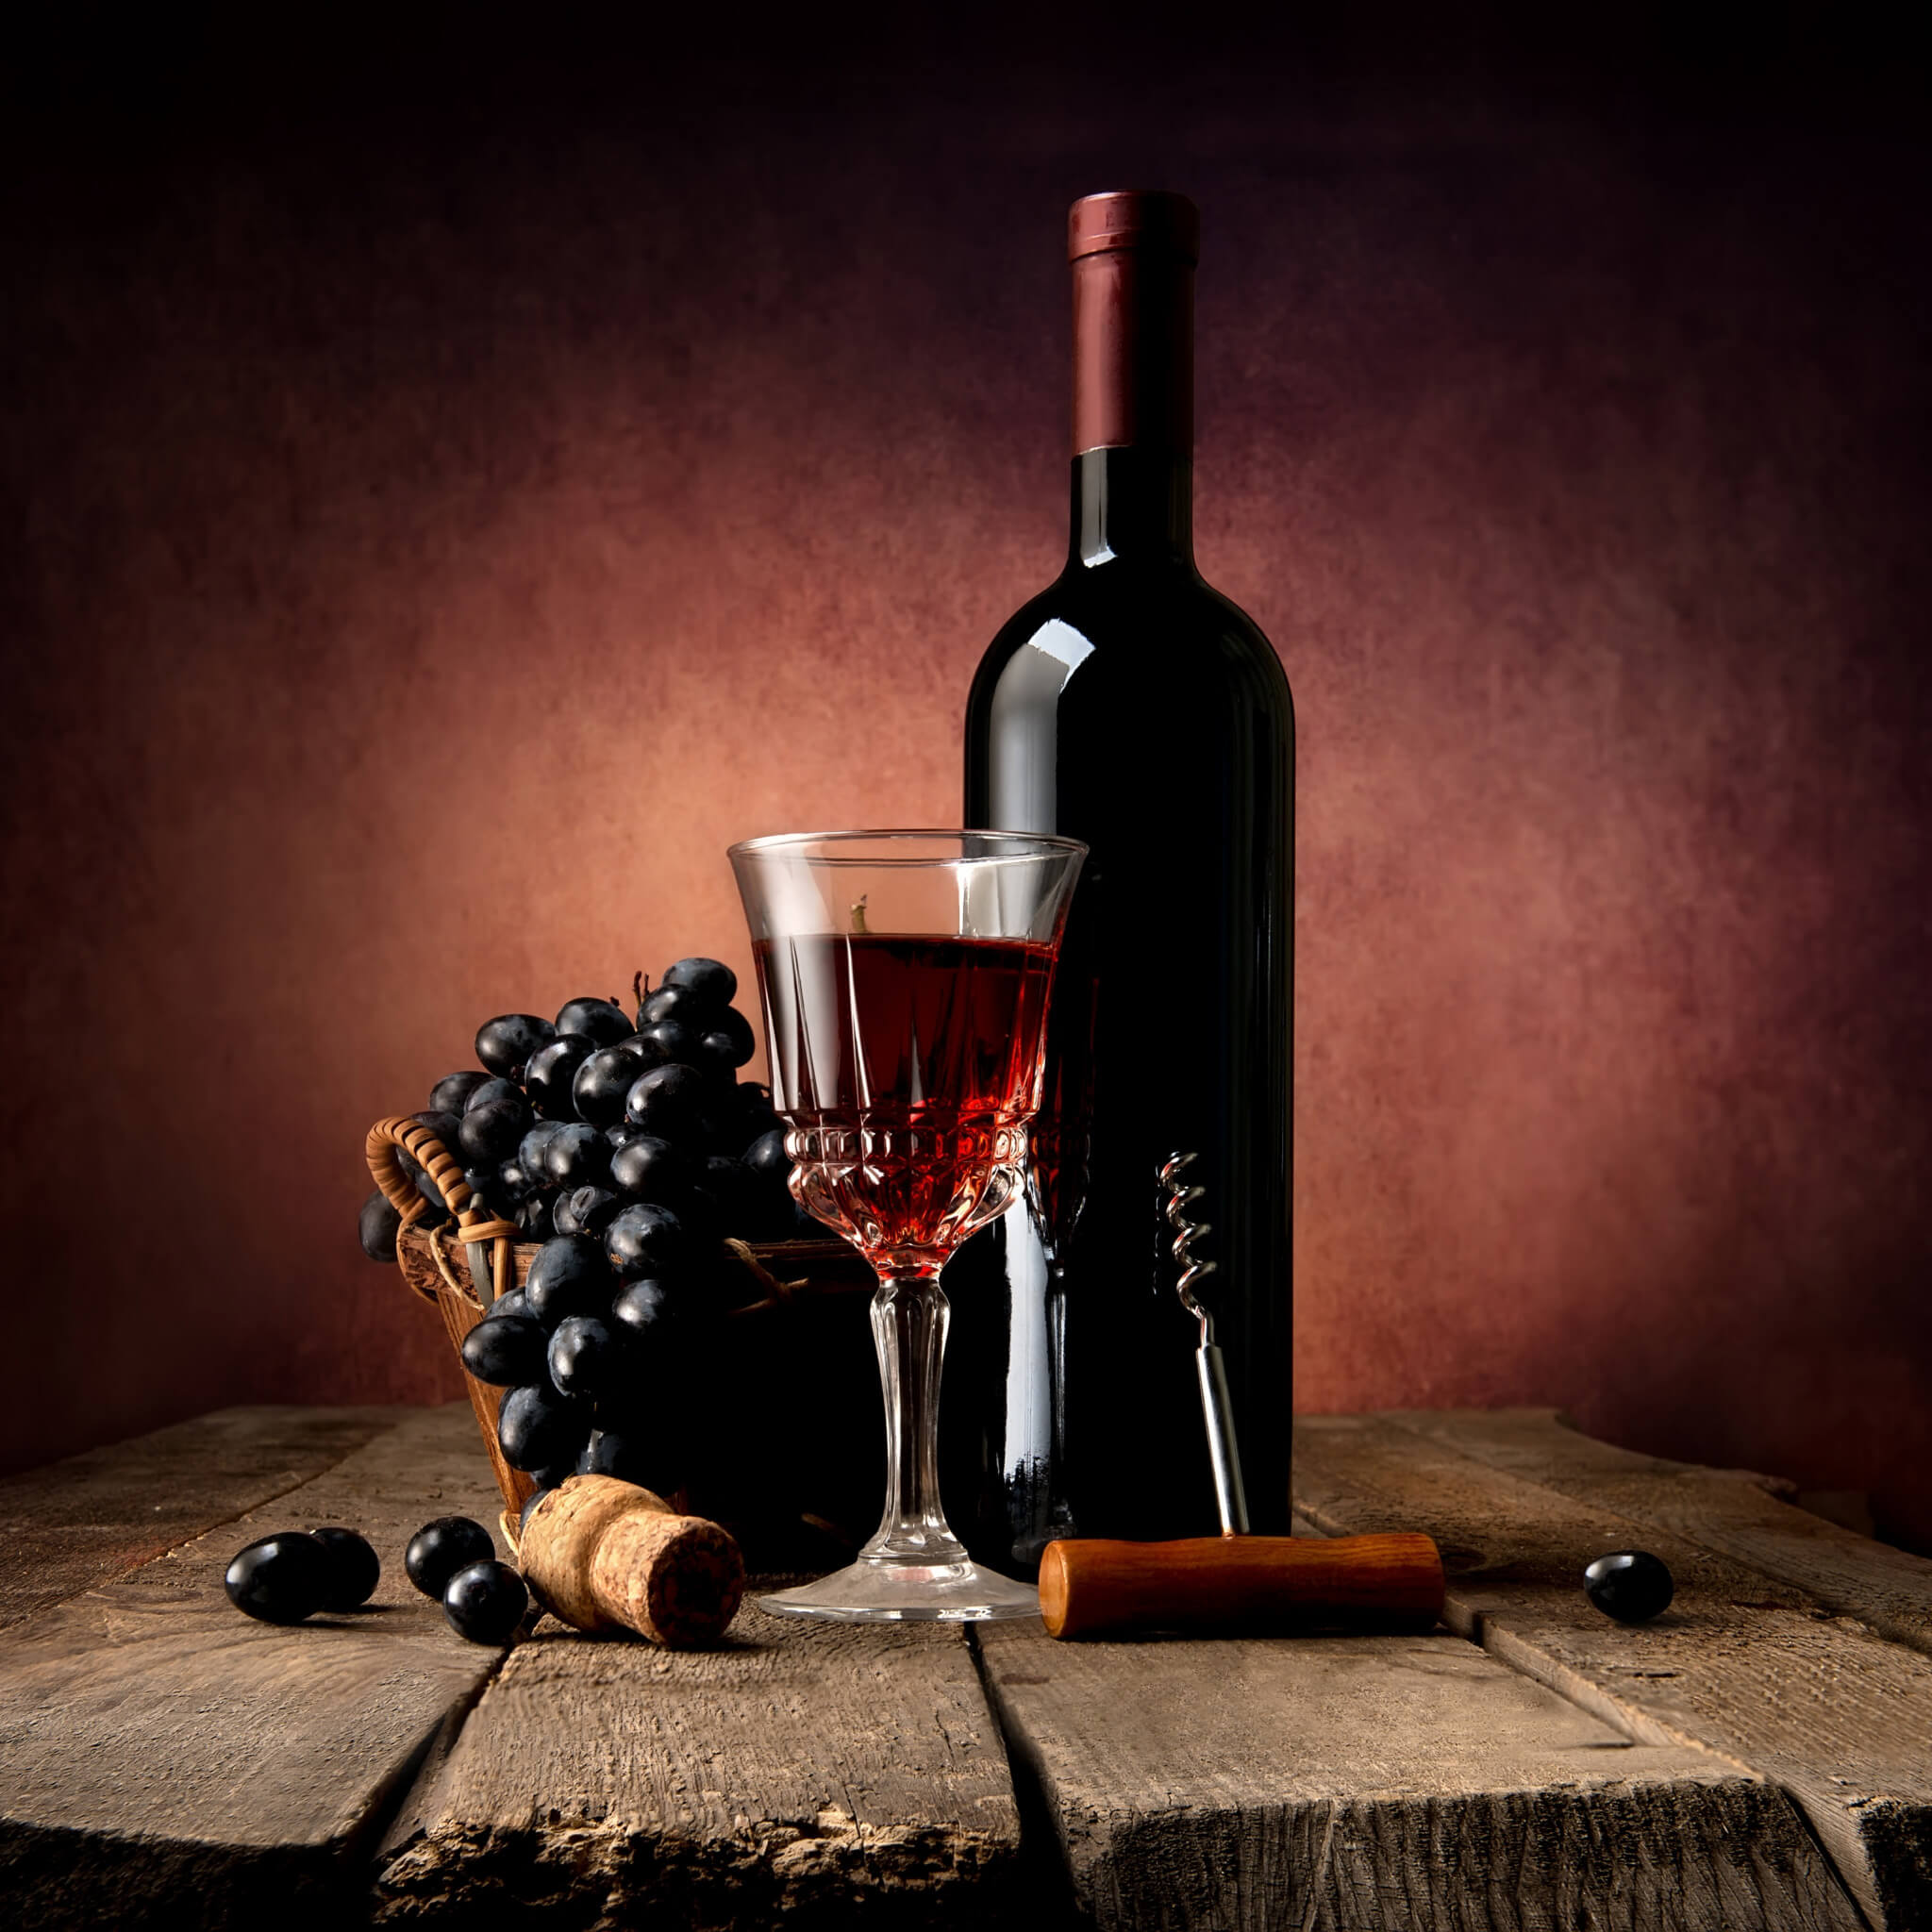 дорогое вино, самое дорогое вино, дорогие вина мира, самое дорогое вино в мире, дорогие вина цены, дорогое вино название, дорогое красное вино, самое дорогое вино цена, бутылка дорогого вина, дорогие сорта вин, дорогие французские вина, дорогое белое вино